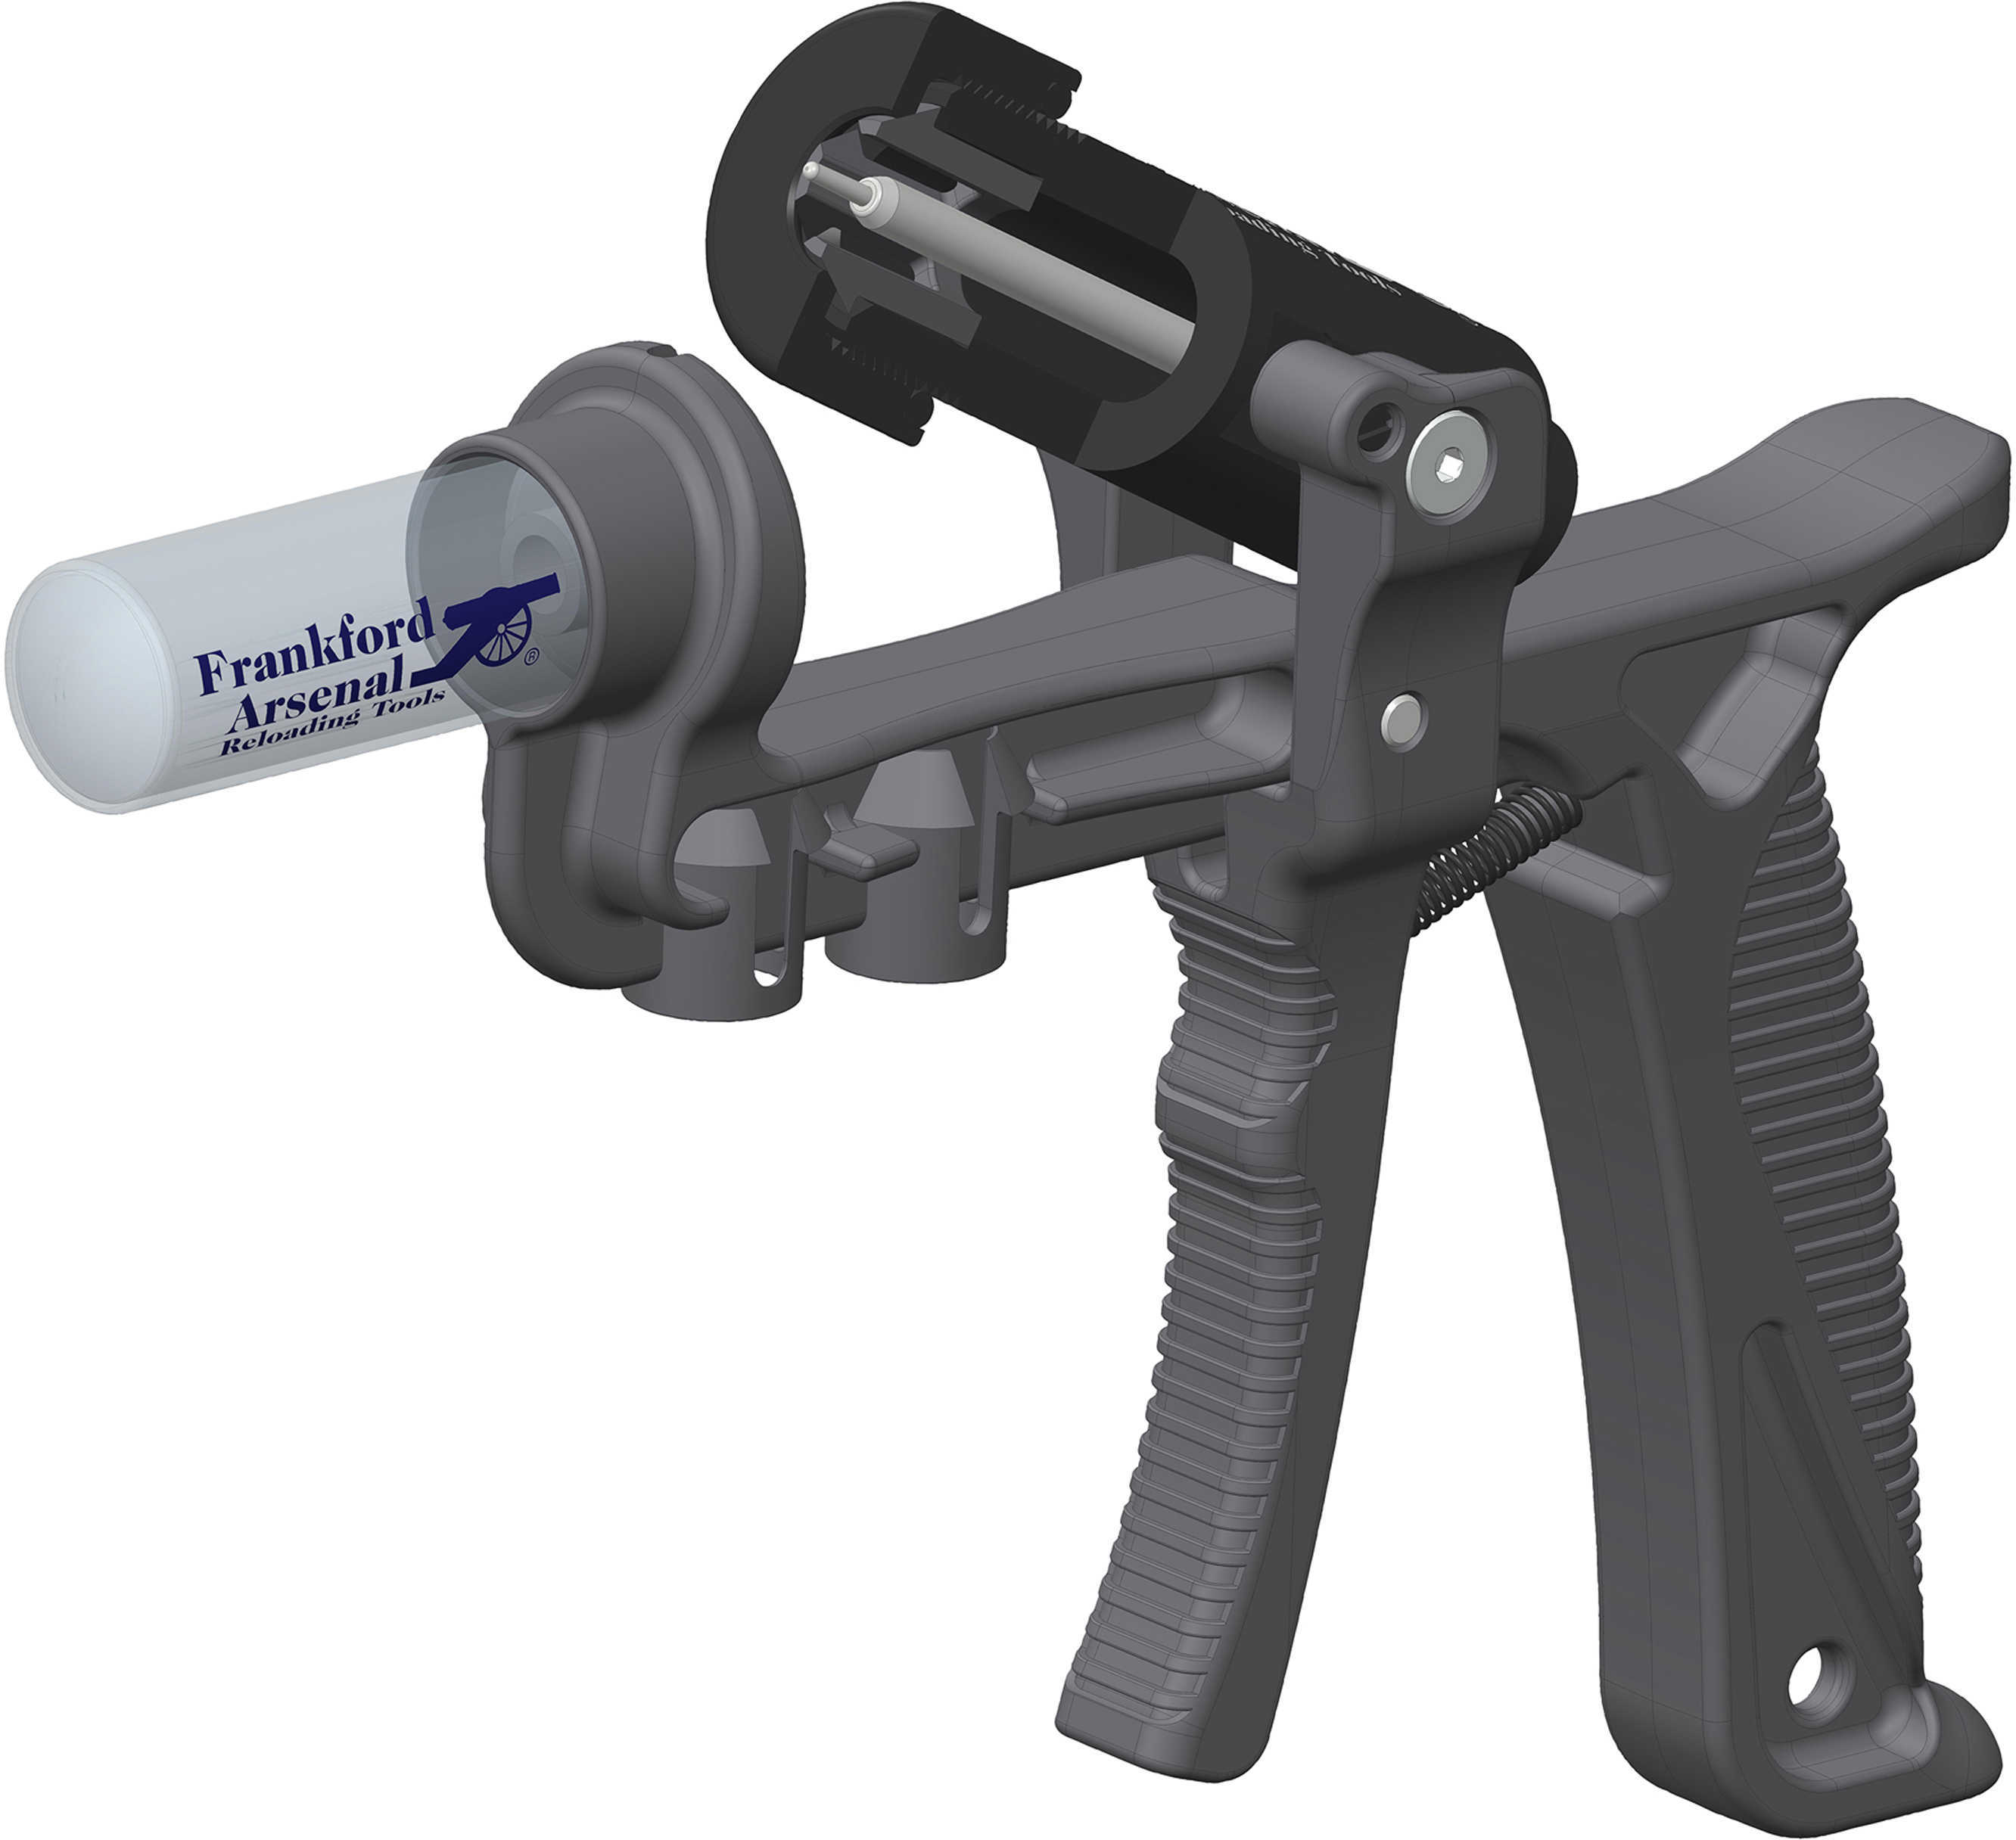 Frankford Arsenal Handheld Depriming Tool  Model: 909283